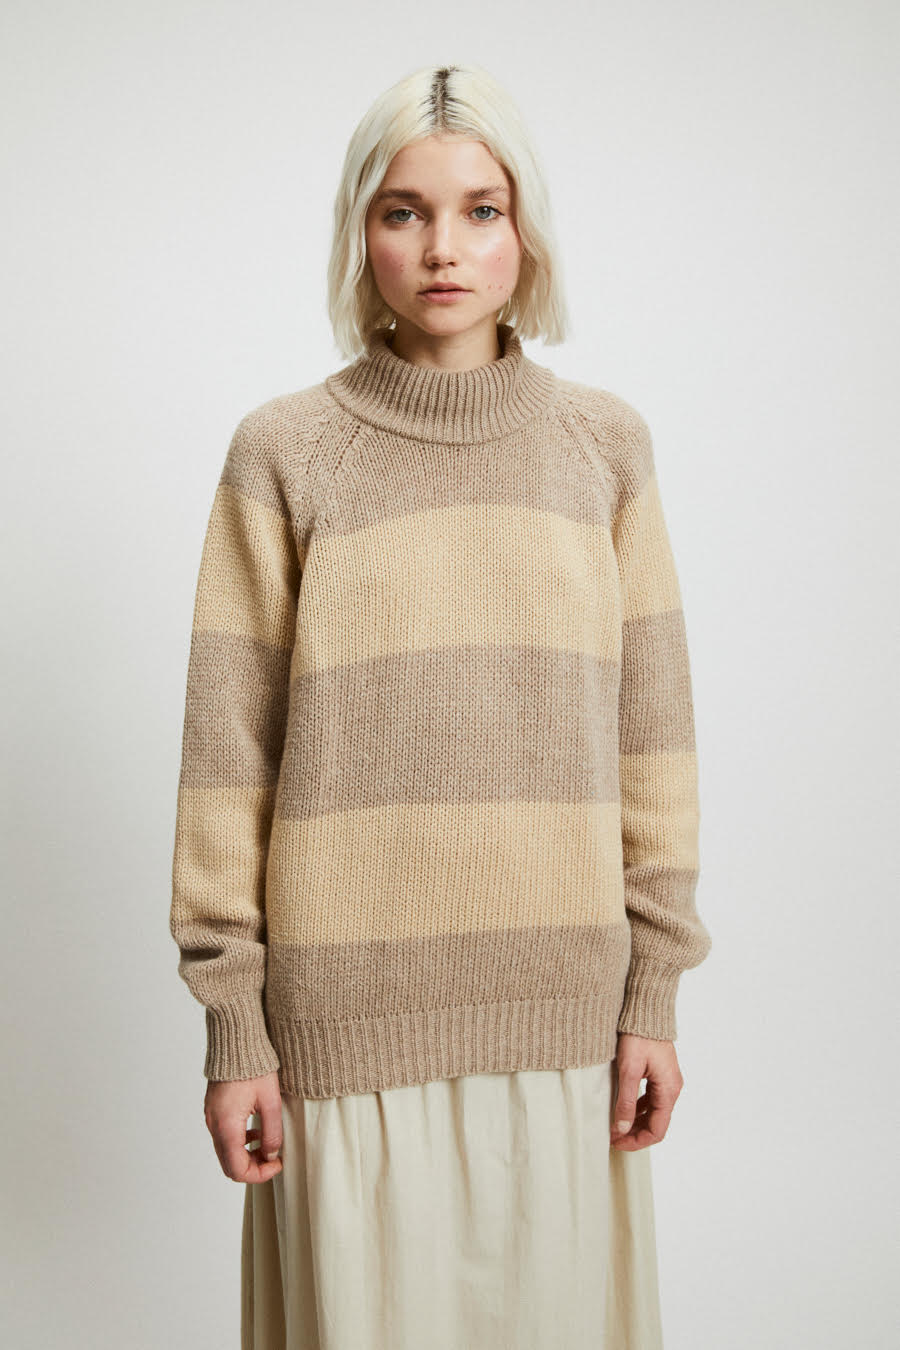 Rita Row - Waite Oversize Striped Sweater in Linen + Beige